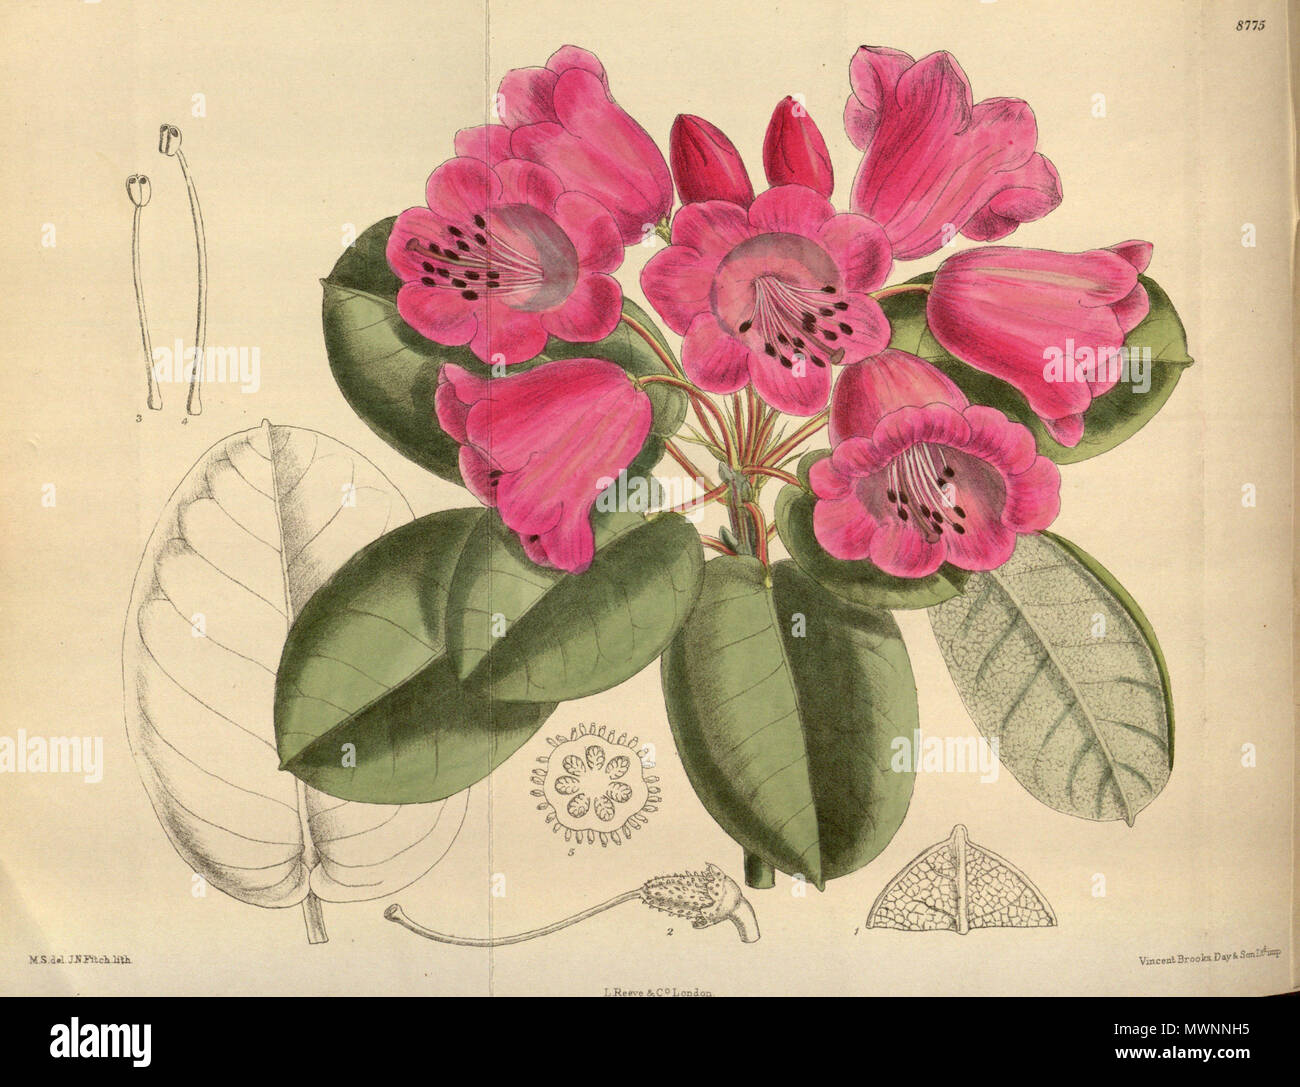 . Rhododendron orbiculare, Ericaceae . 1918. M.S. del., J.N.Fitch lith. 520 Rhododendron orbiculare 144-8775 Stock Photo